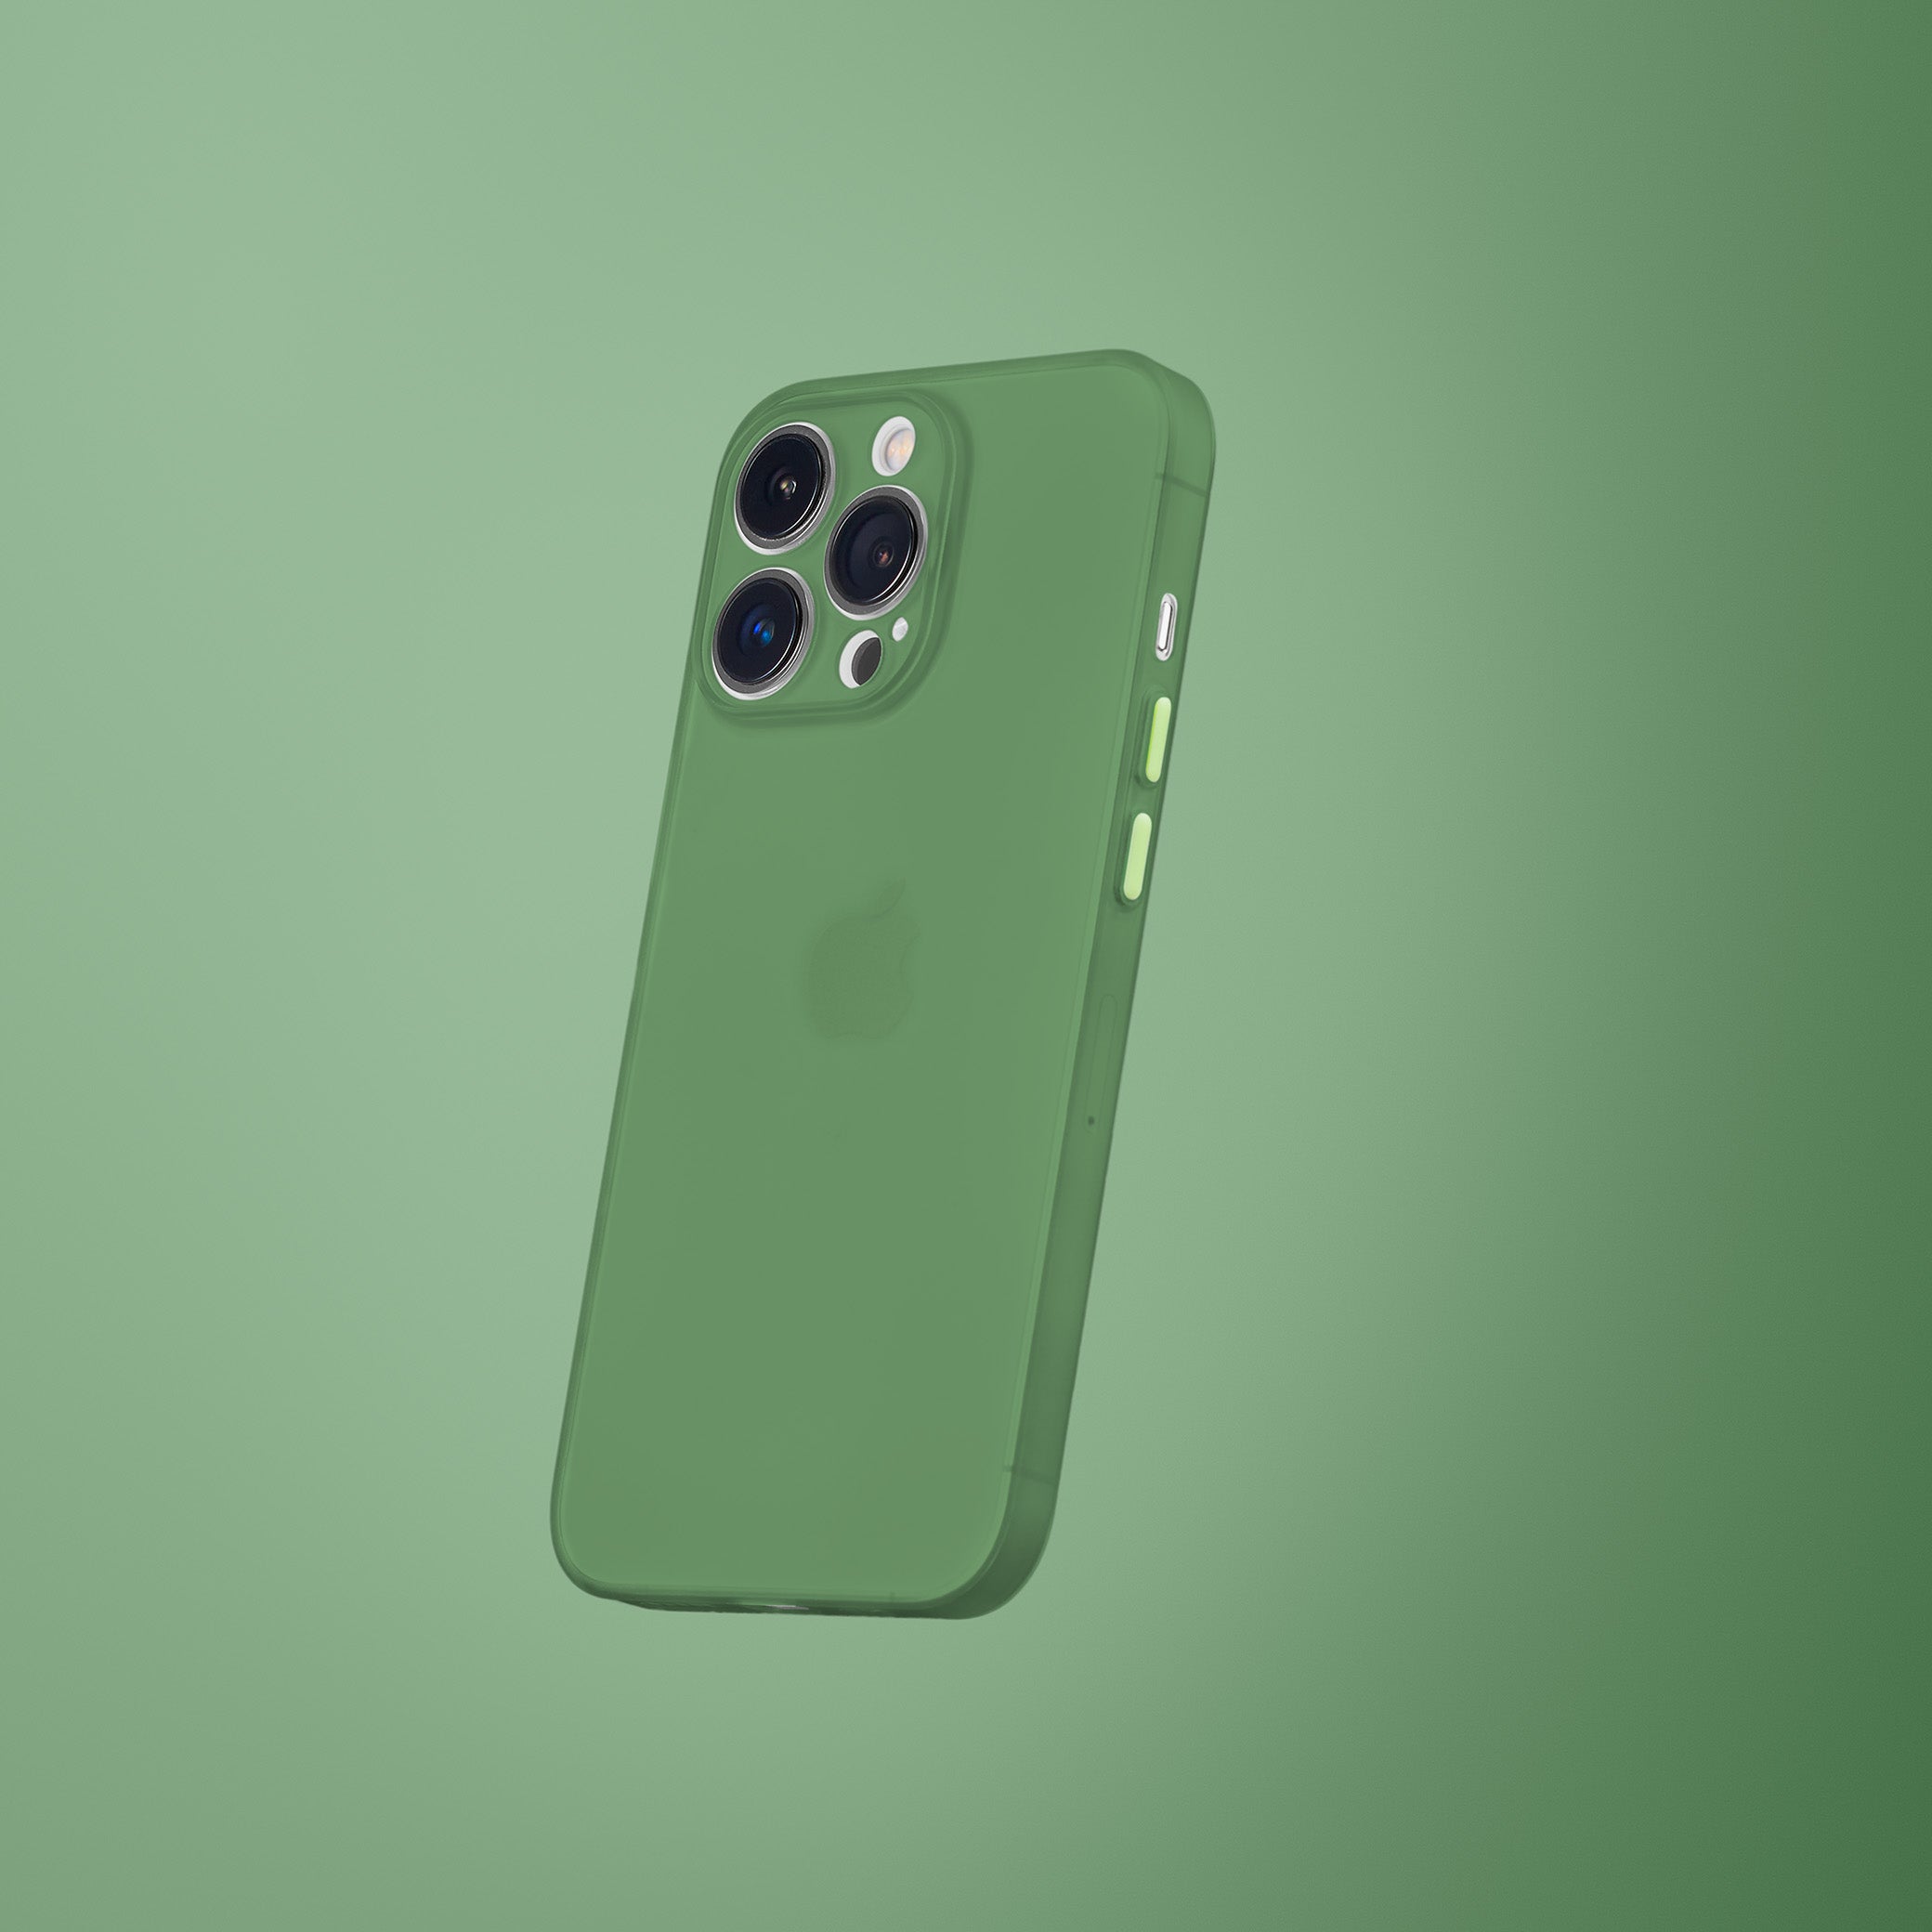 Super Slim Case 2.0 for iPhone 13 Pro - Avacado Green